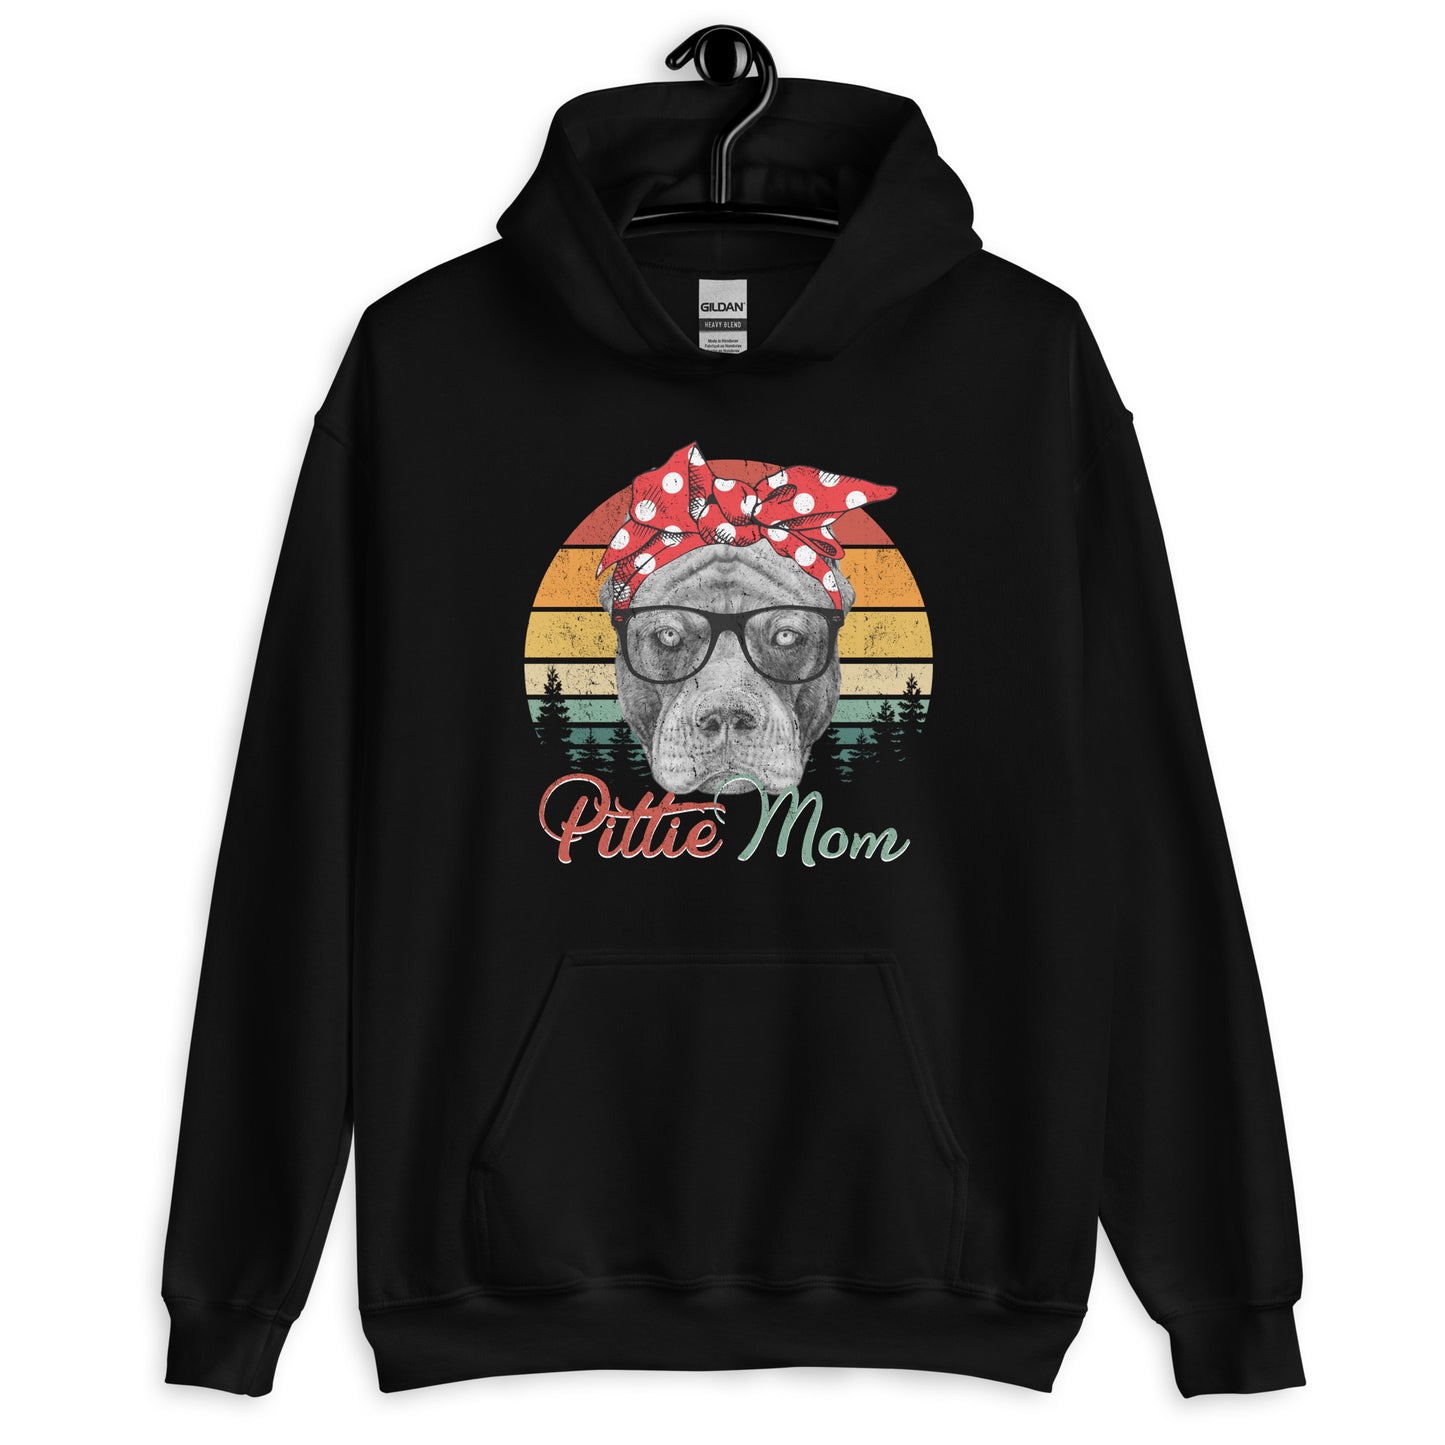 Pittie Mom - Pitbull Dog Mom Hoodie